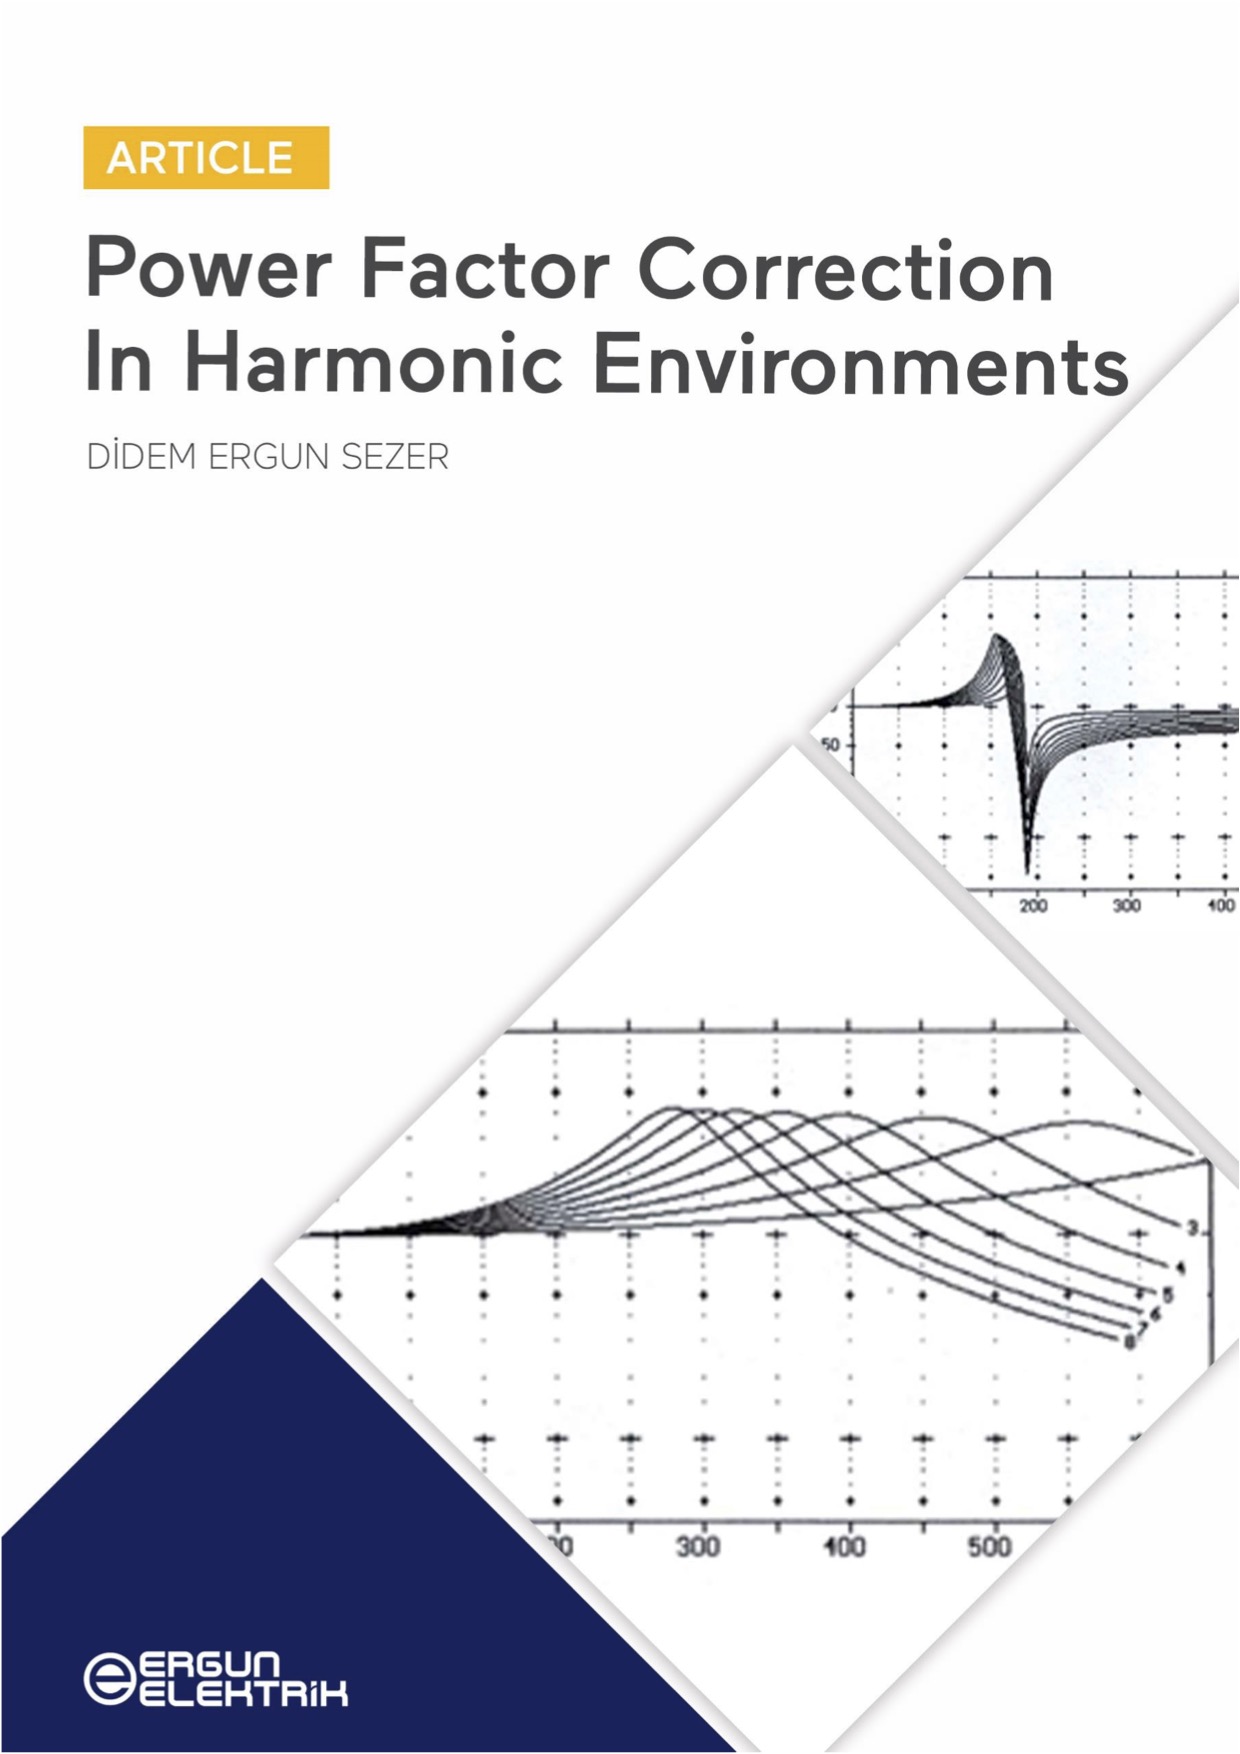 Power Factor Correction in Harmonic Environments